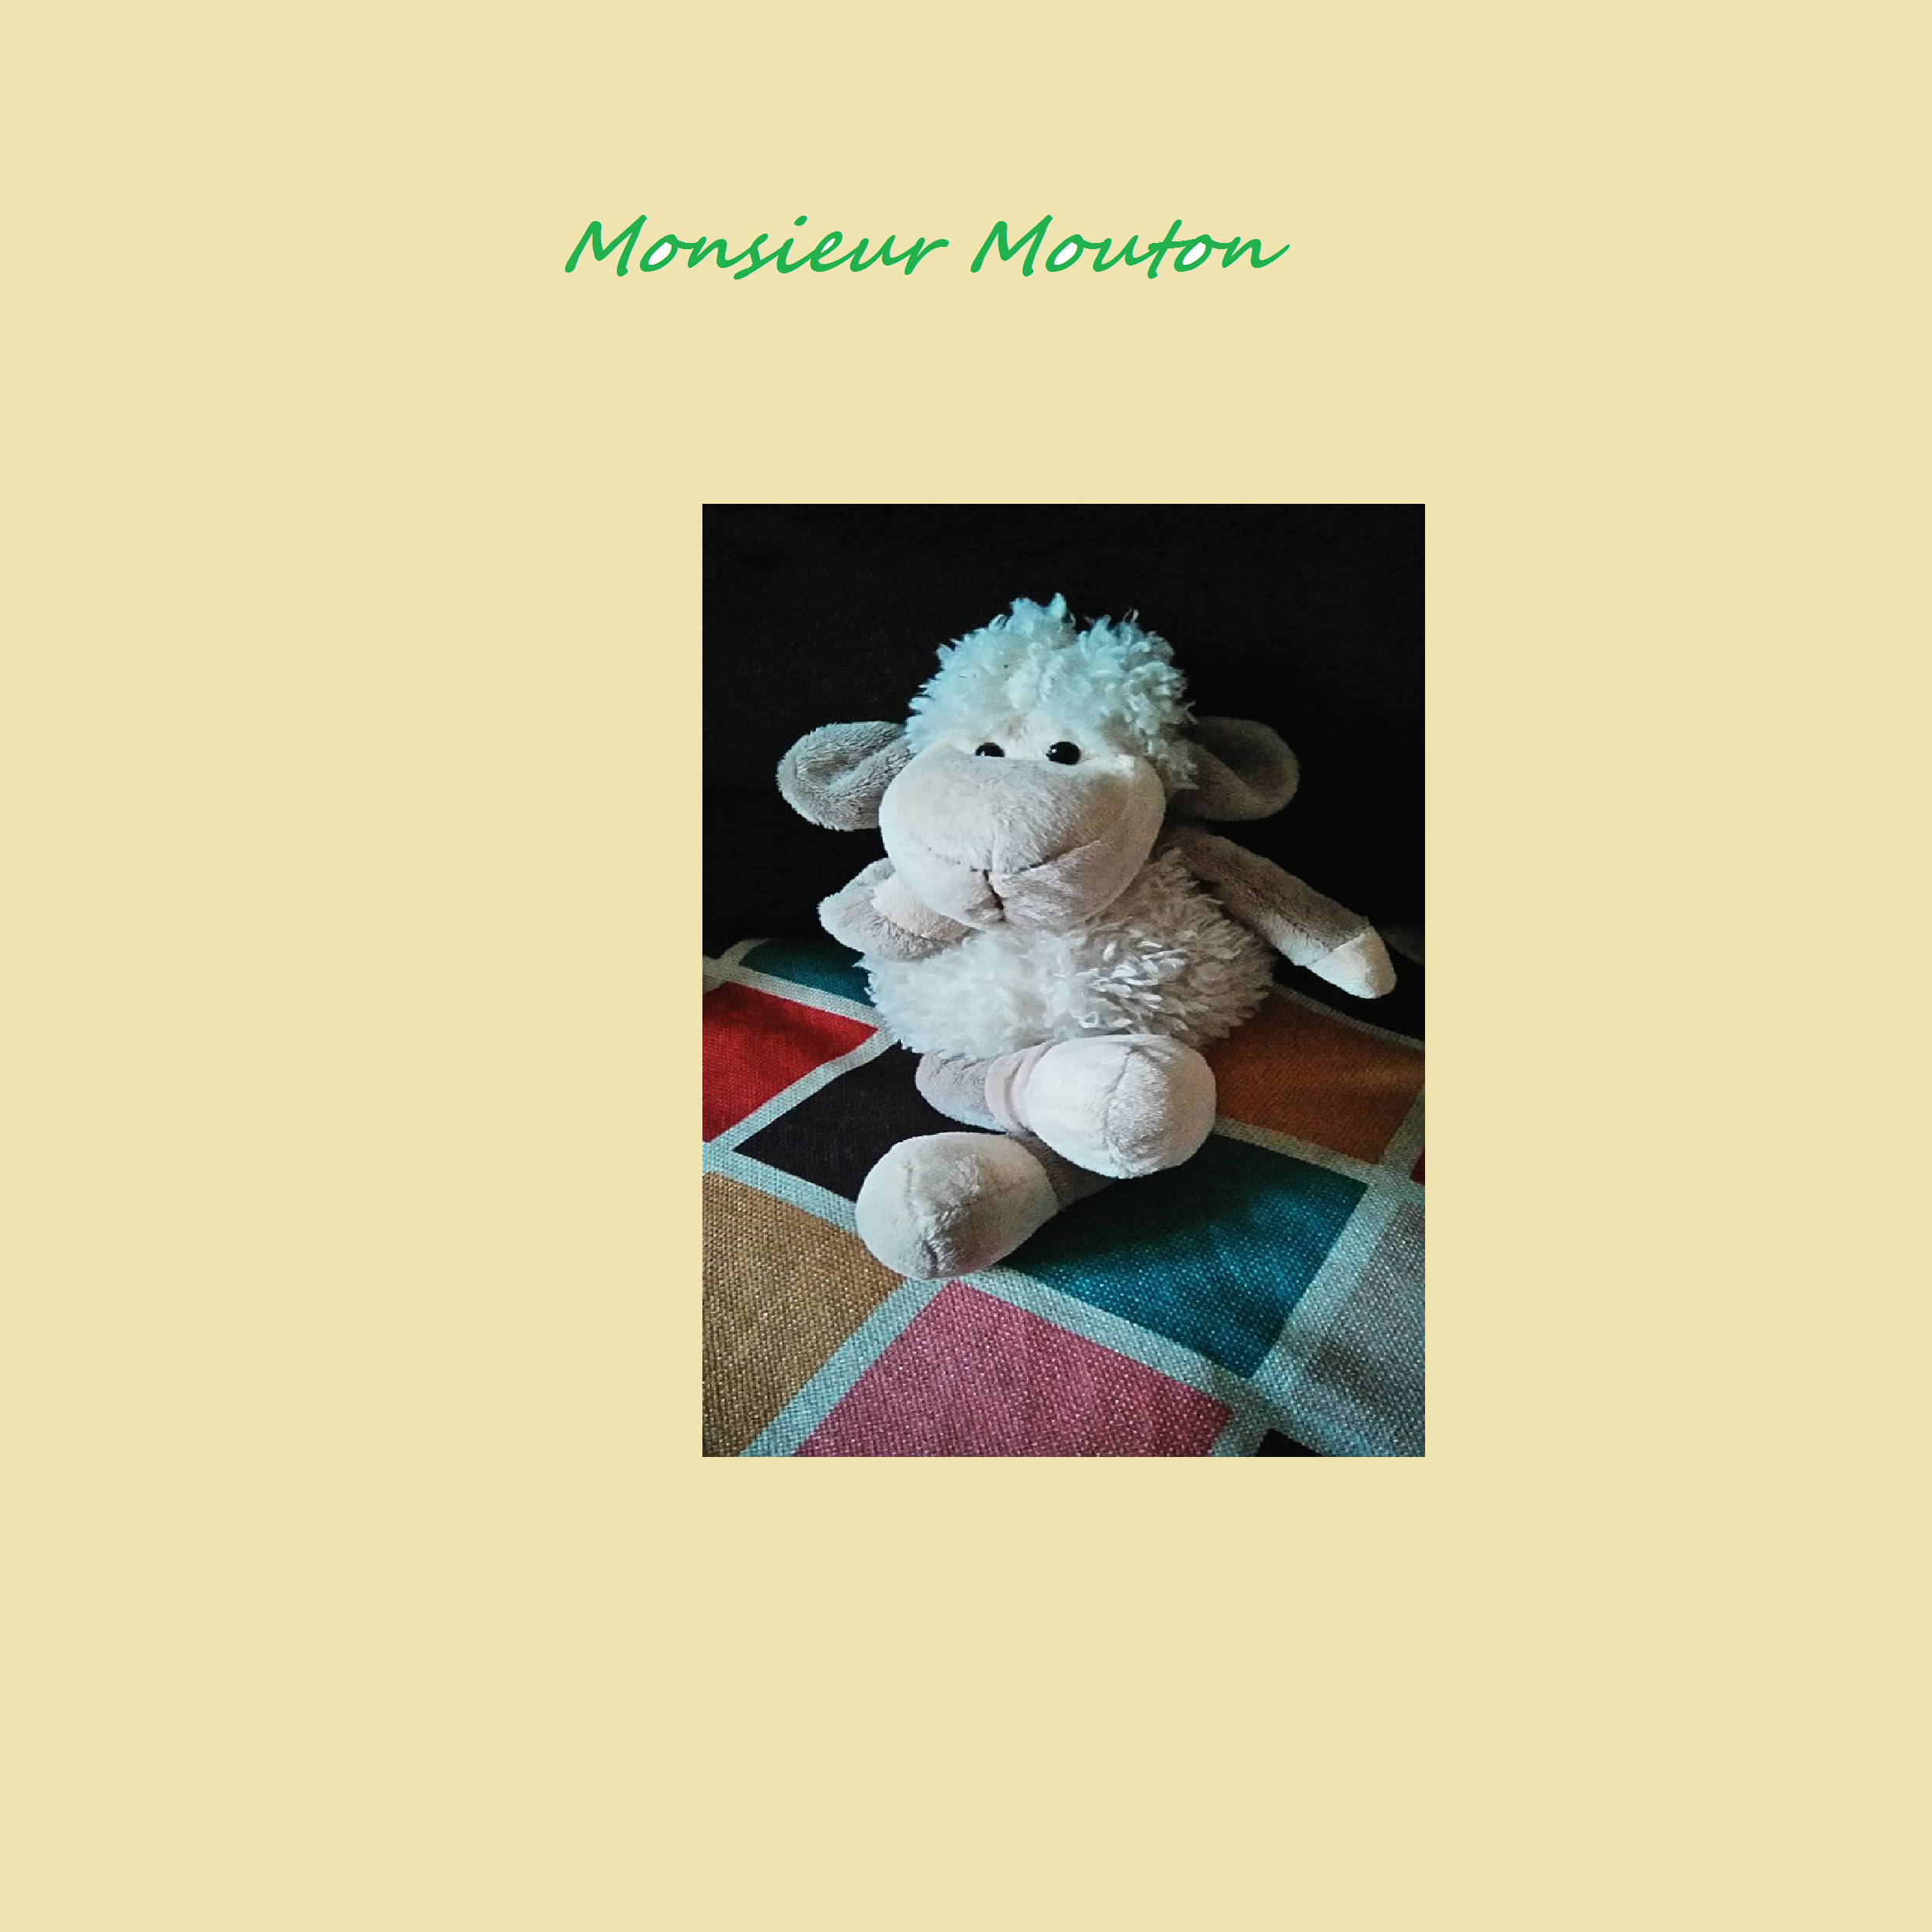 Monsieur Mouton